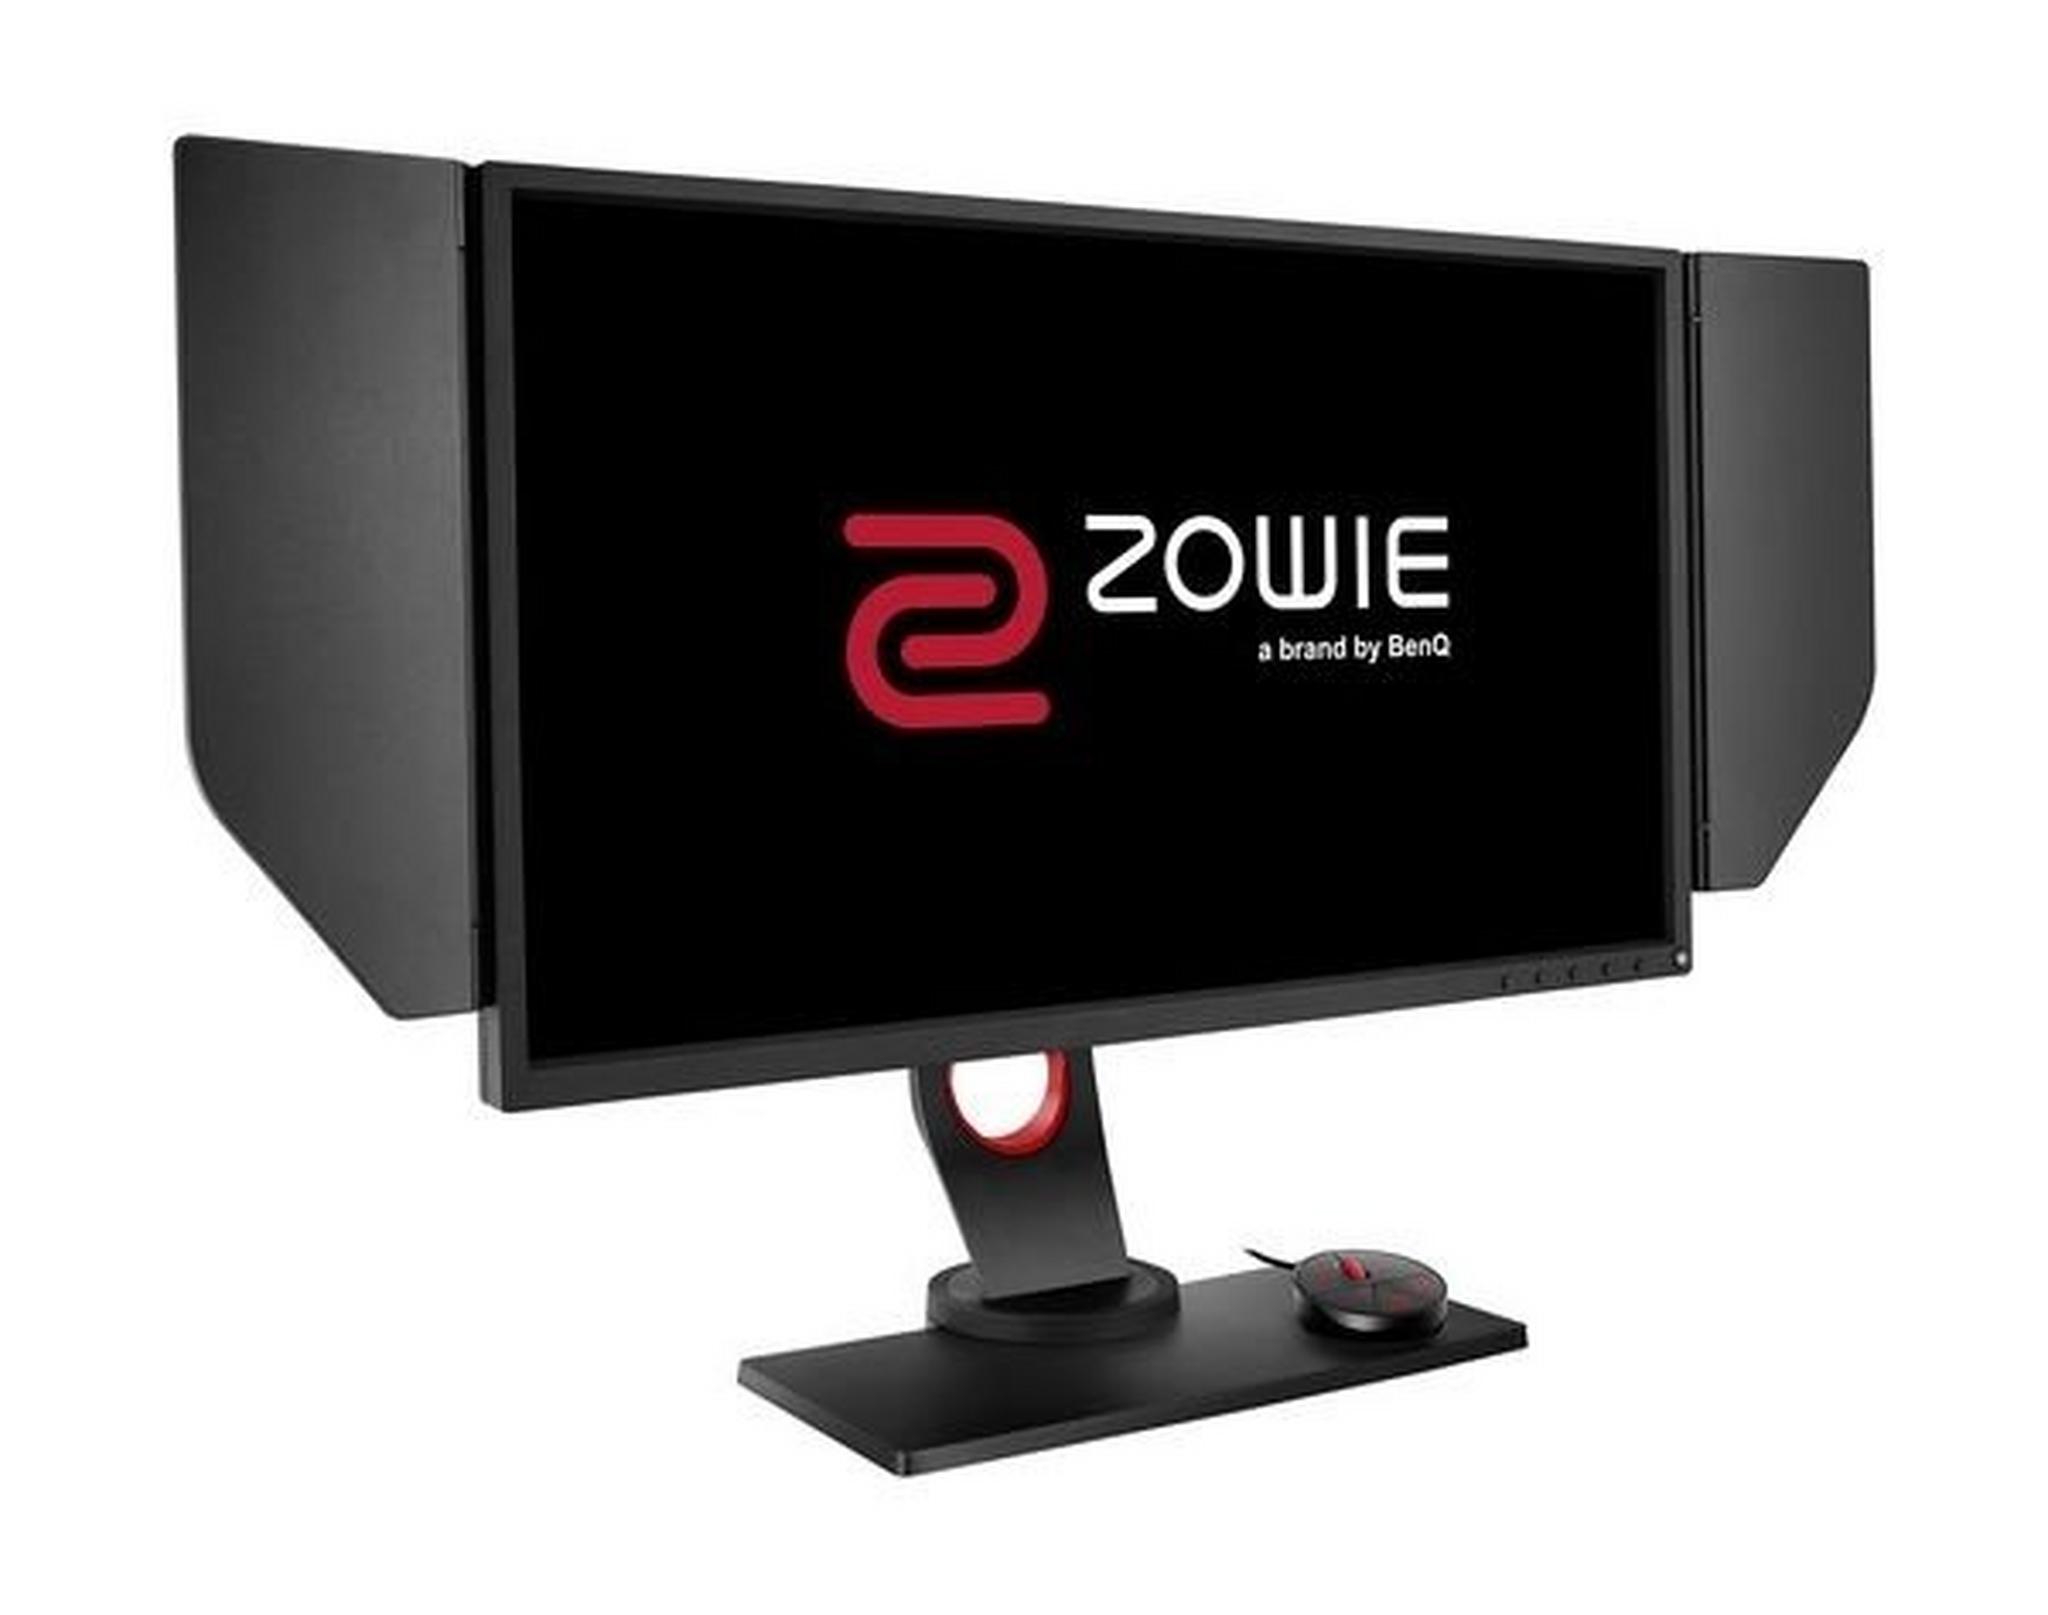 BenQ Zowie 27-inch LCD Gaming Monitor (XL2740) - Black